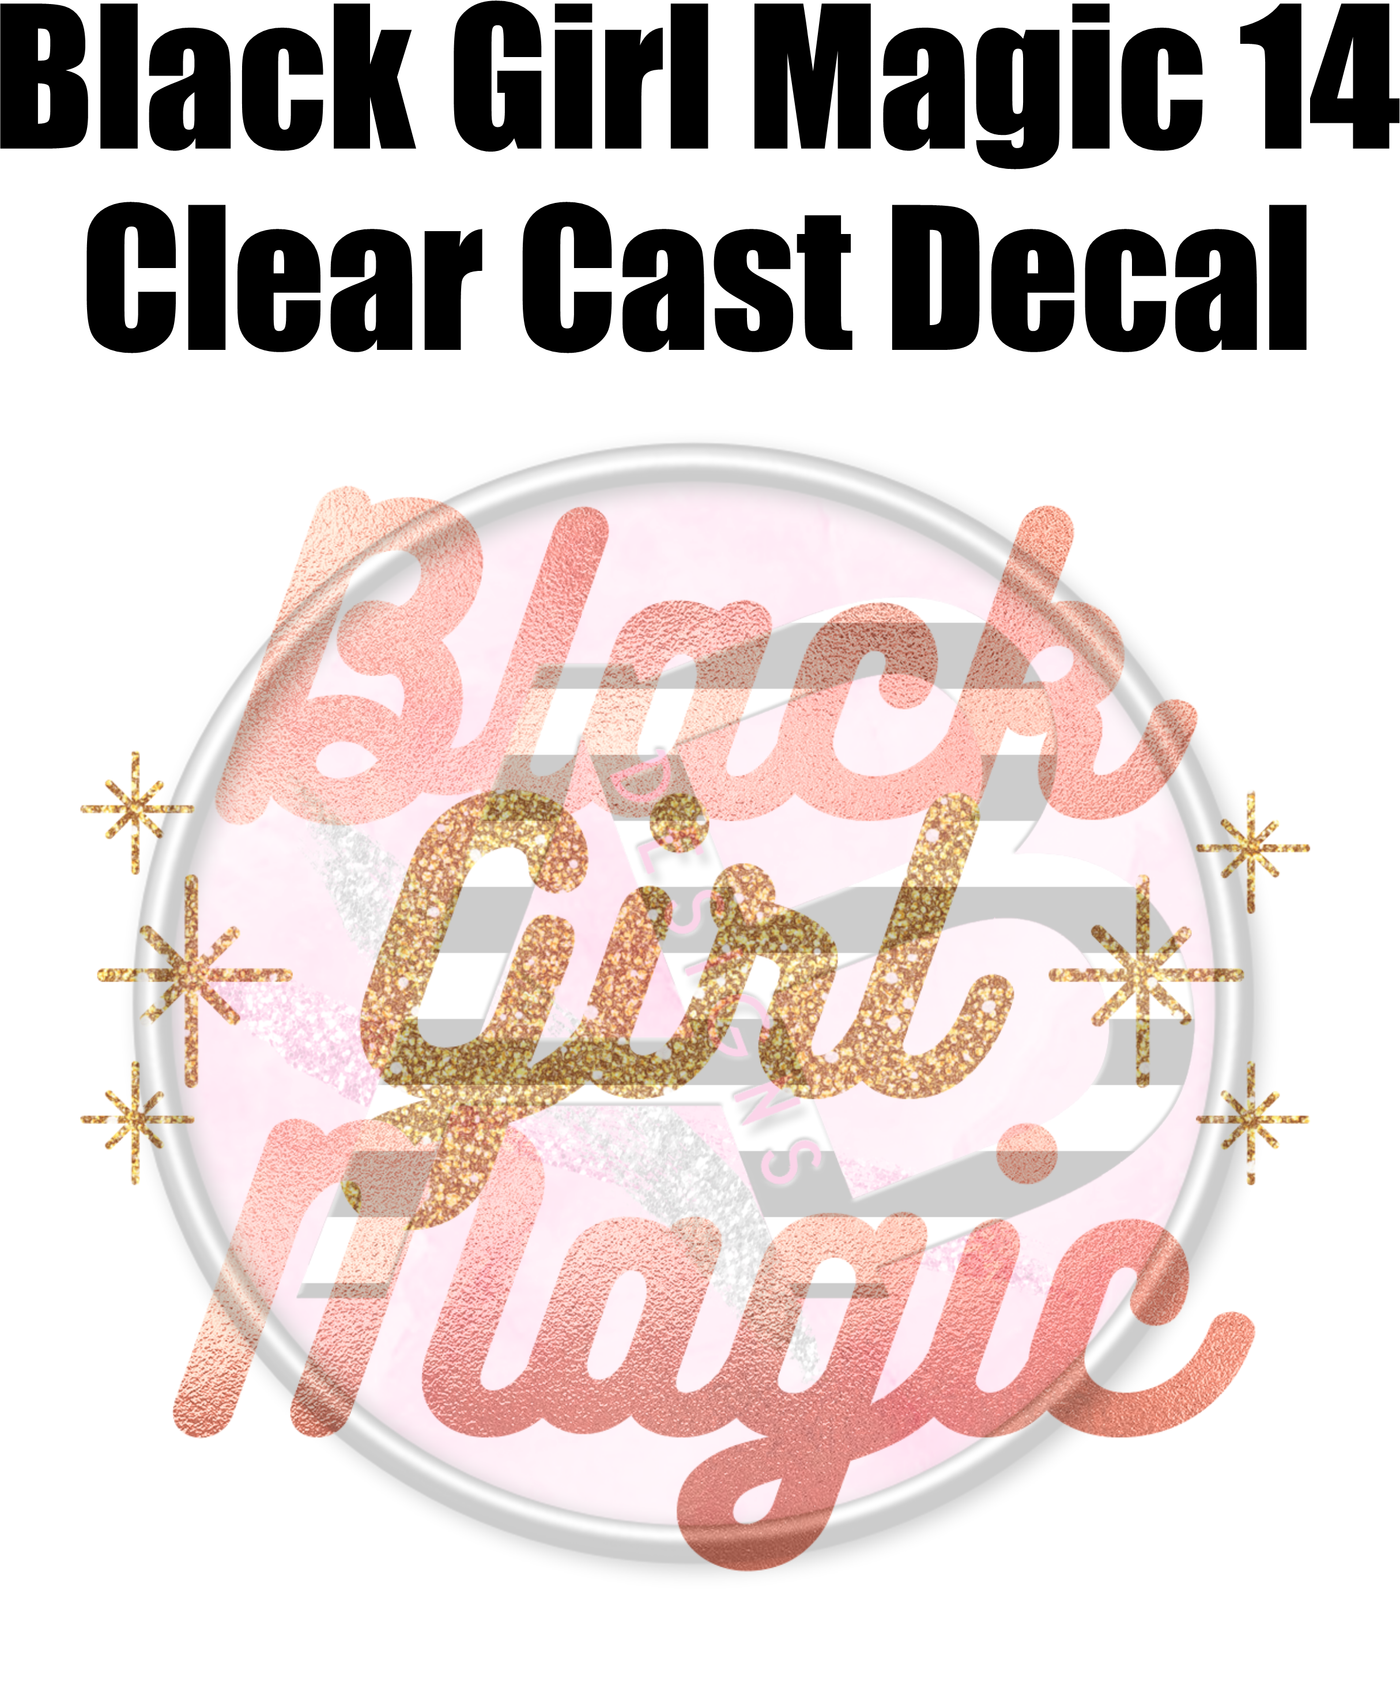 Black Girl Magic 14 - Clear Cast Decal